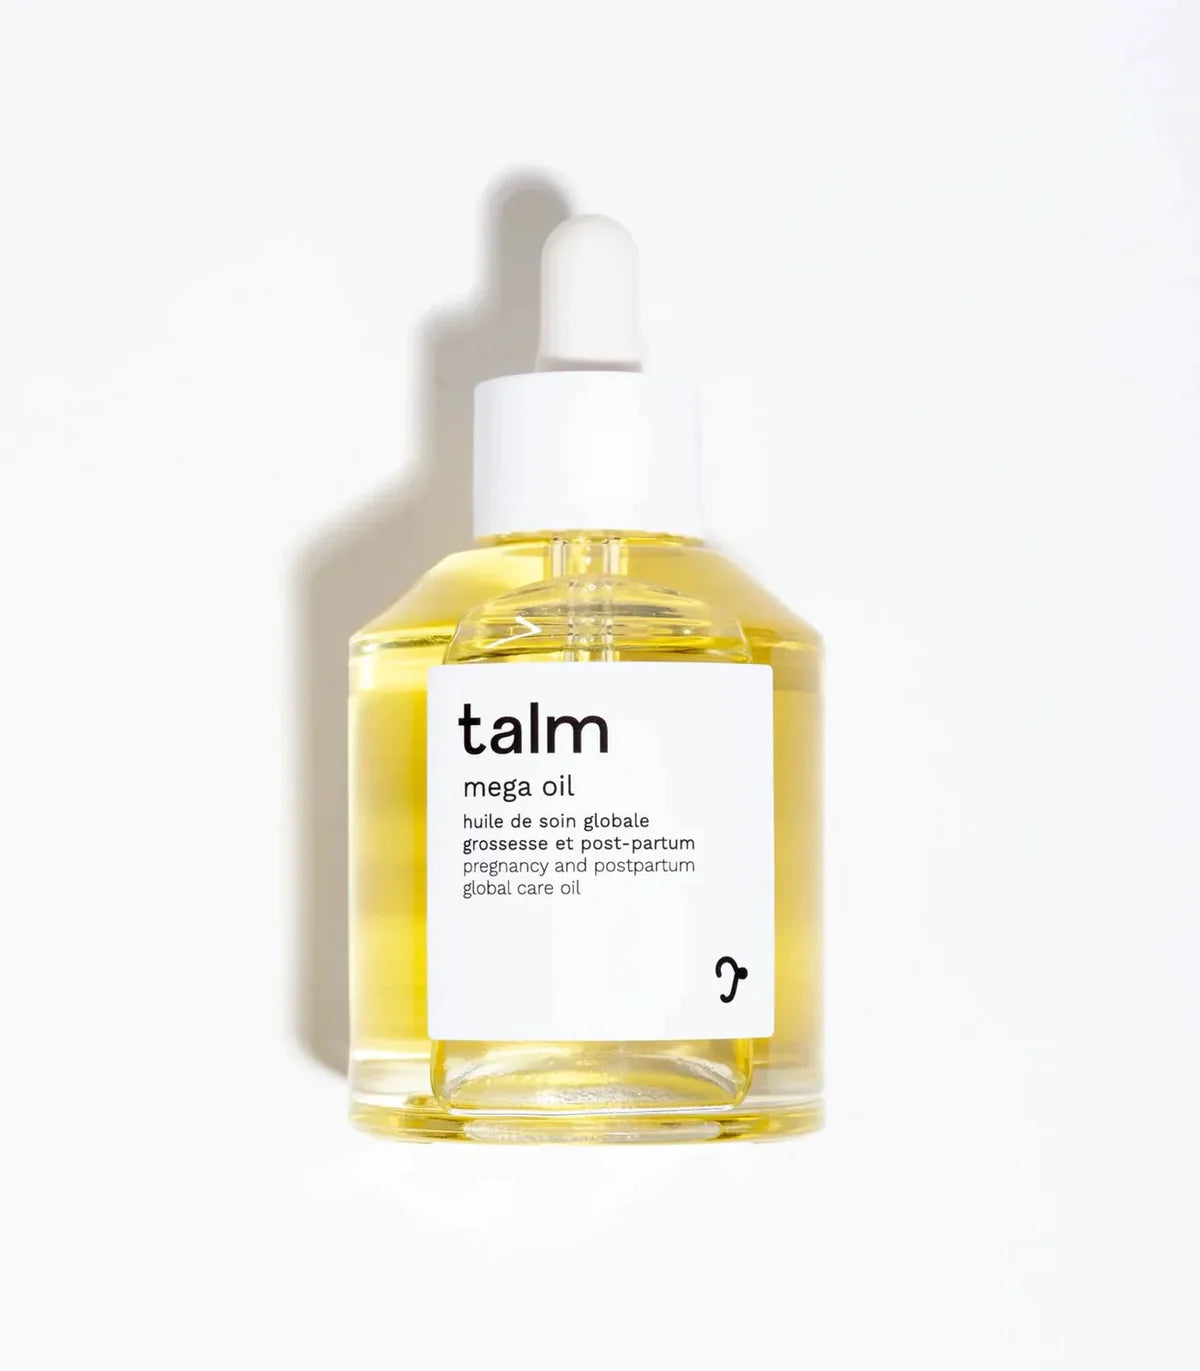 Talm - Mega oil - Global skincare oil for pregnancy and postpartum (100ml)